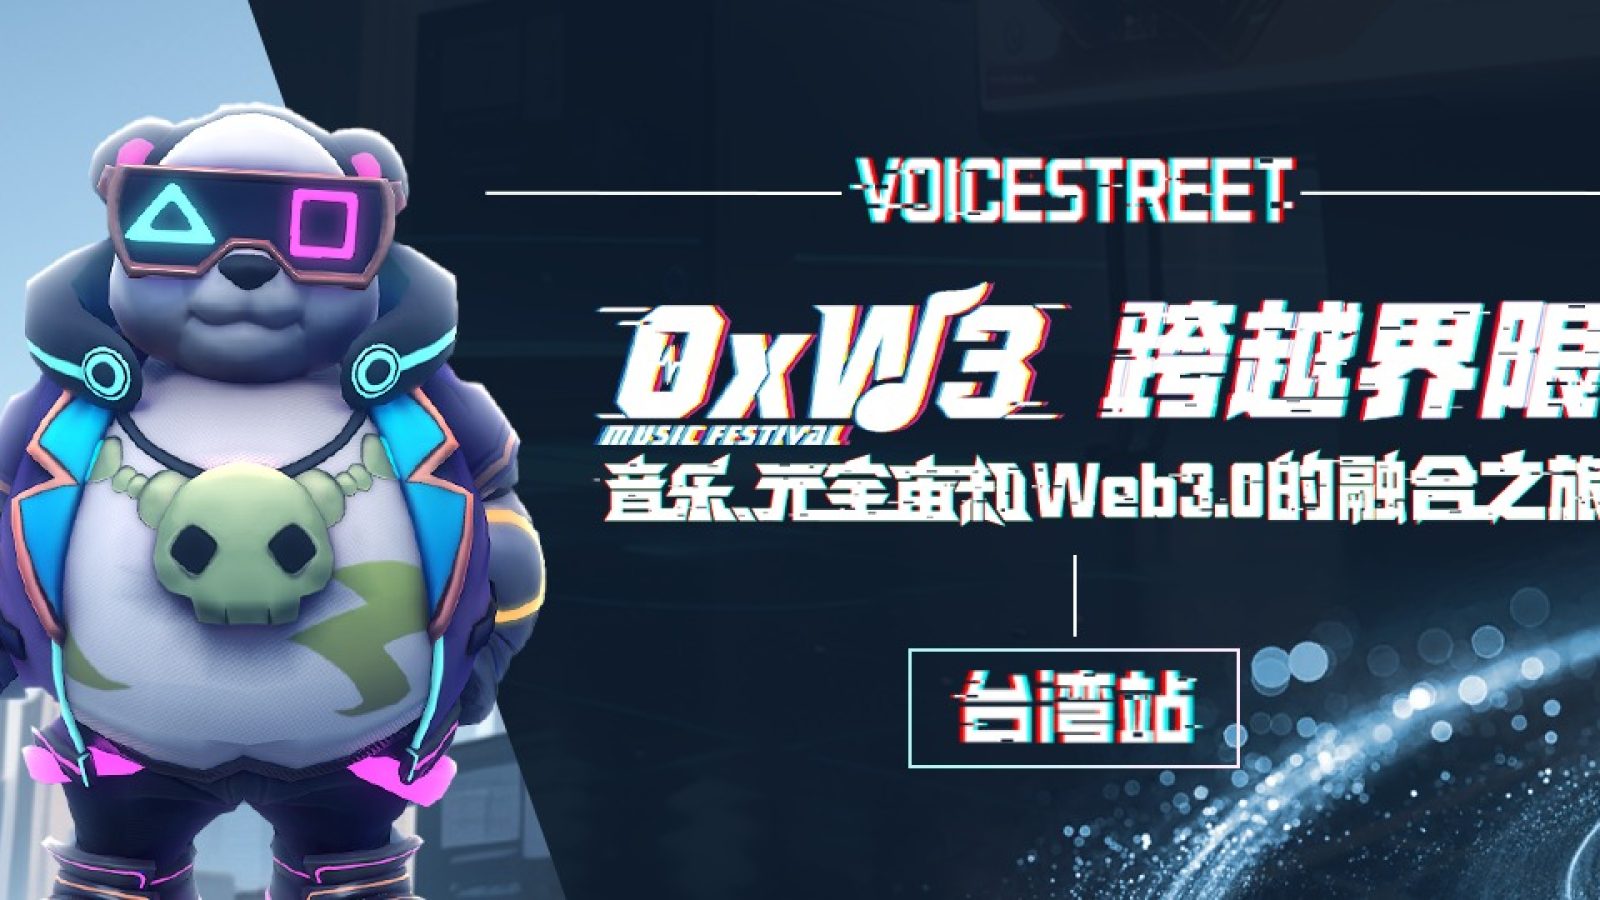 【0xW3跨越界限全球行】台灣站：音樂、Web3.0和元宇宙的創新融合